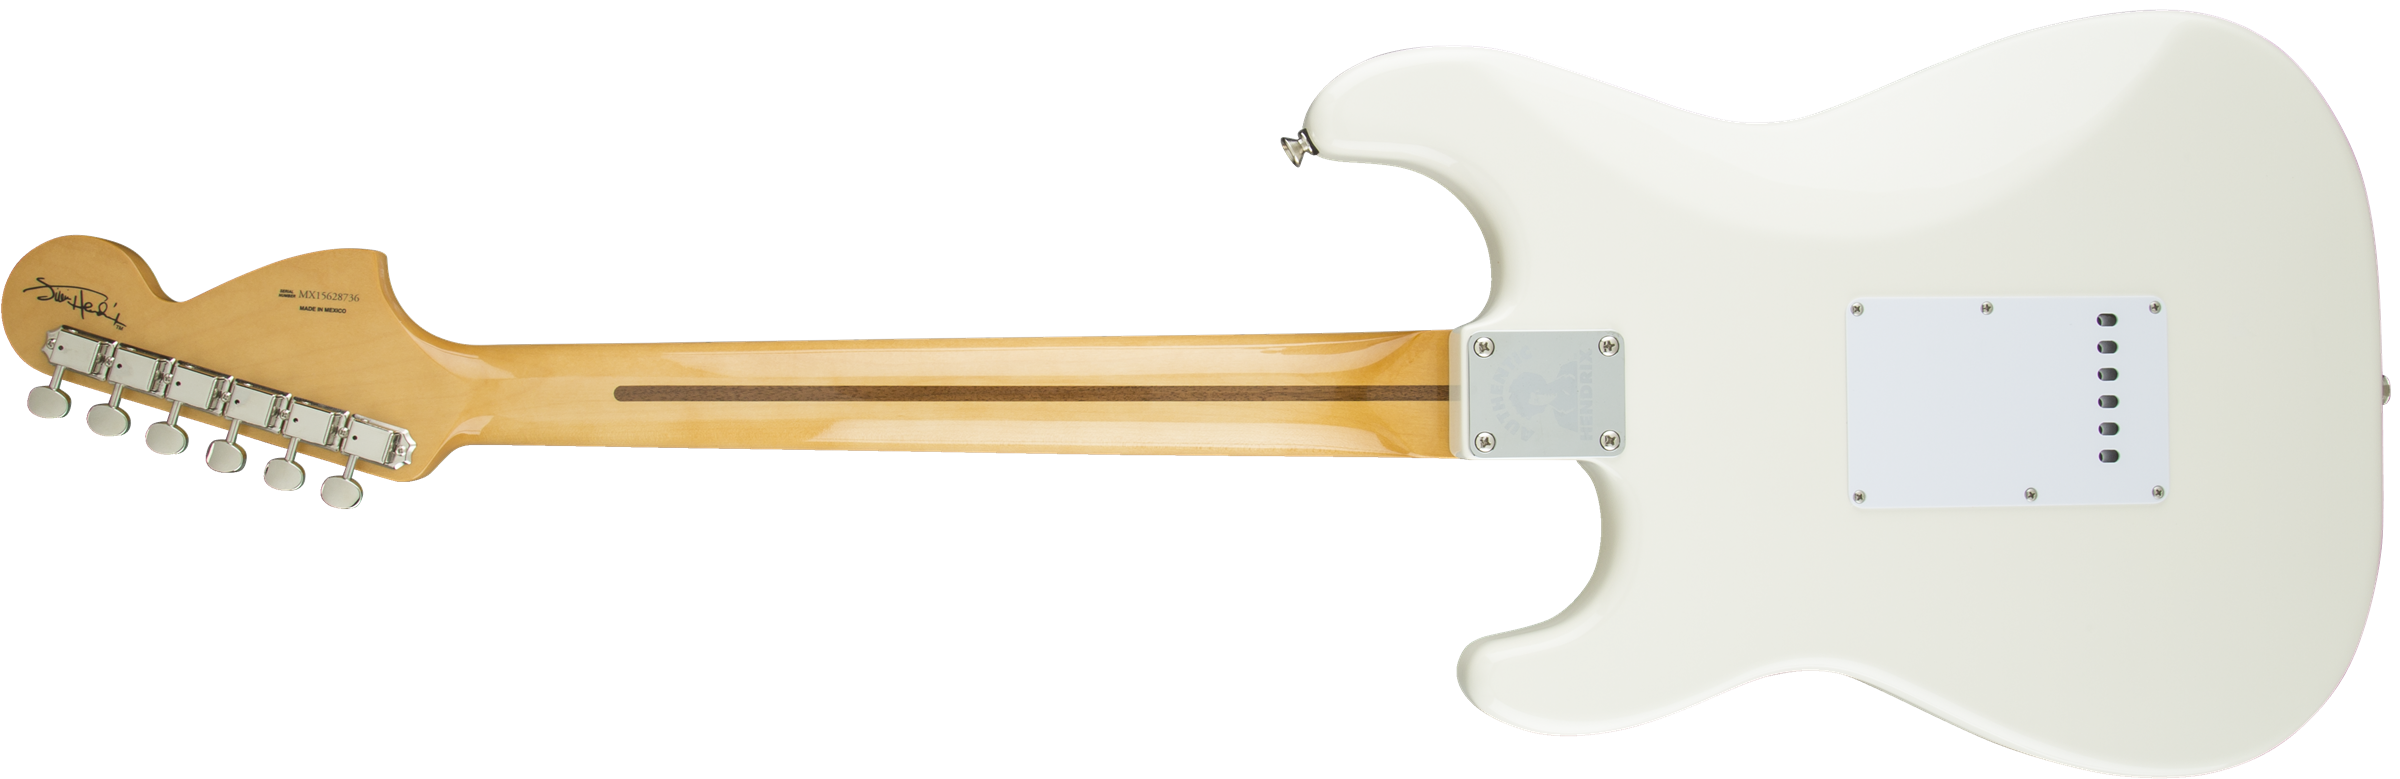 Fender Jimi Hendrix Stratocaster (mex, Mn) - Olympic White - Str shape electric guitar - Variation 1